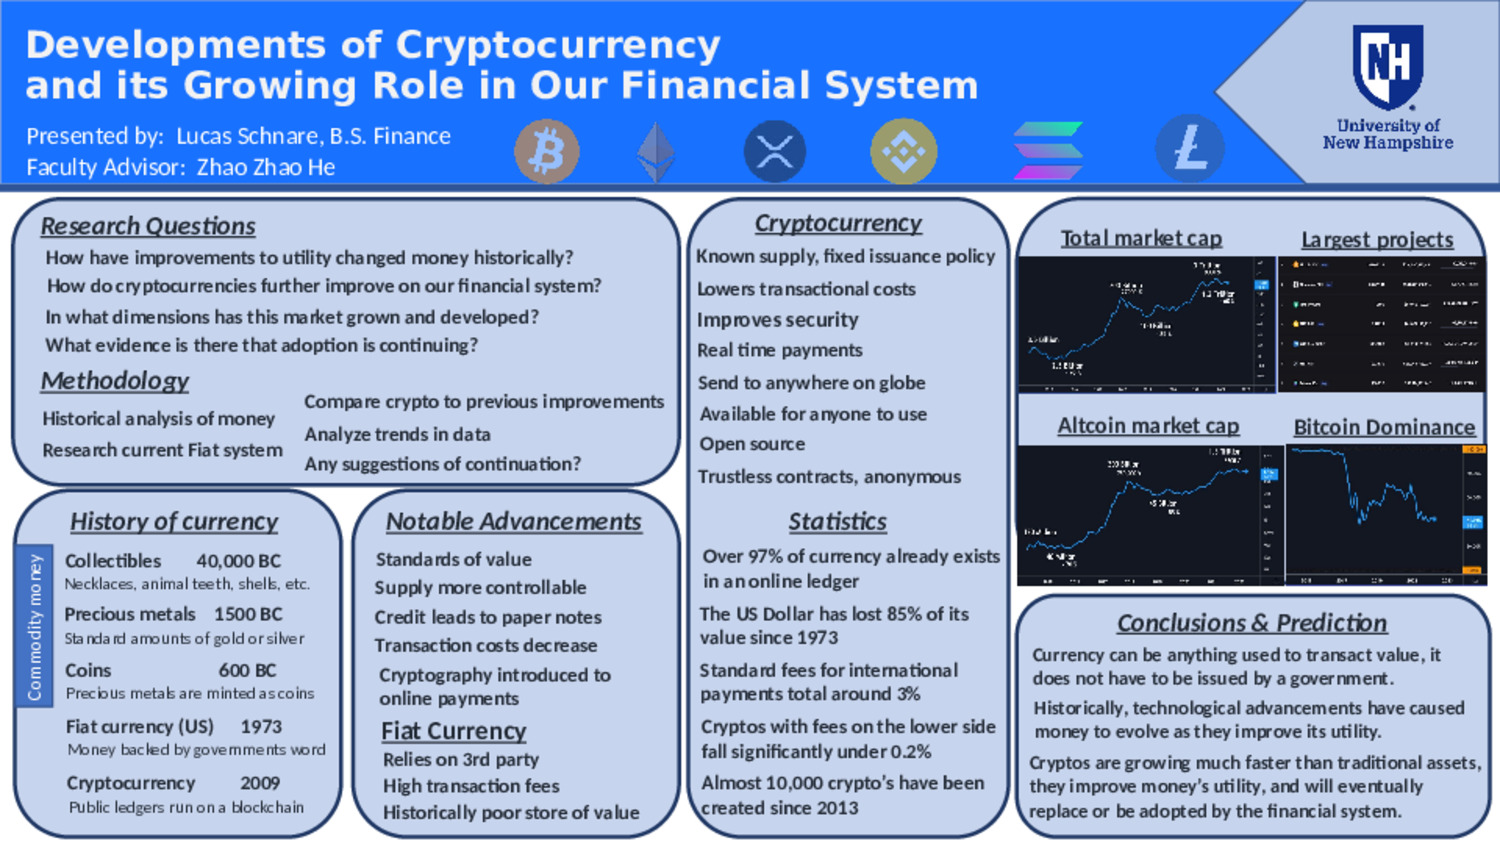 Developments Of CryptocurrencyAnd Its Growing Role In Our Financial System by lhs1009